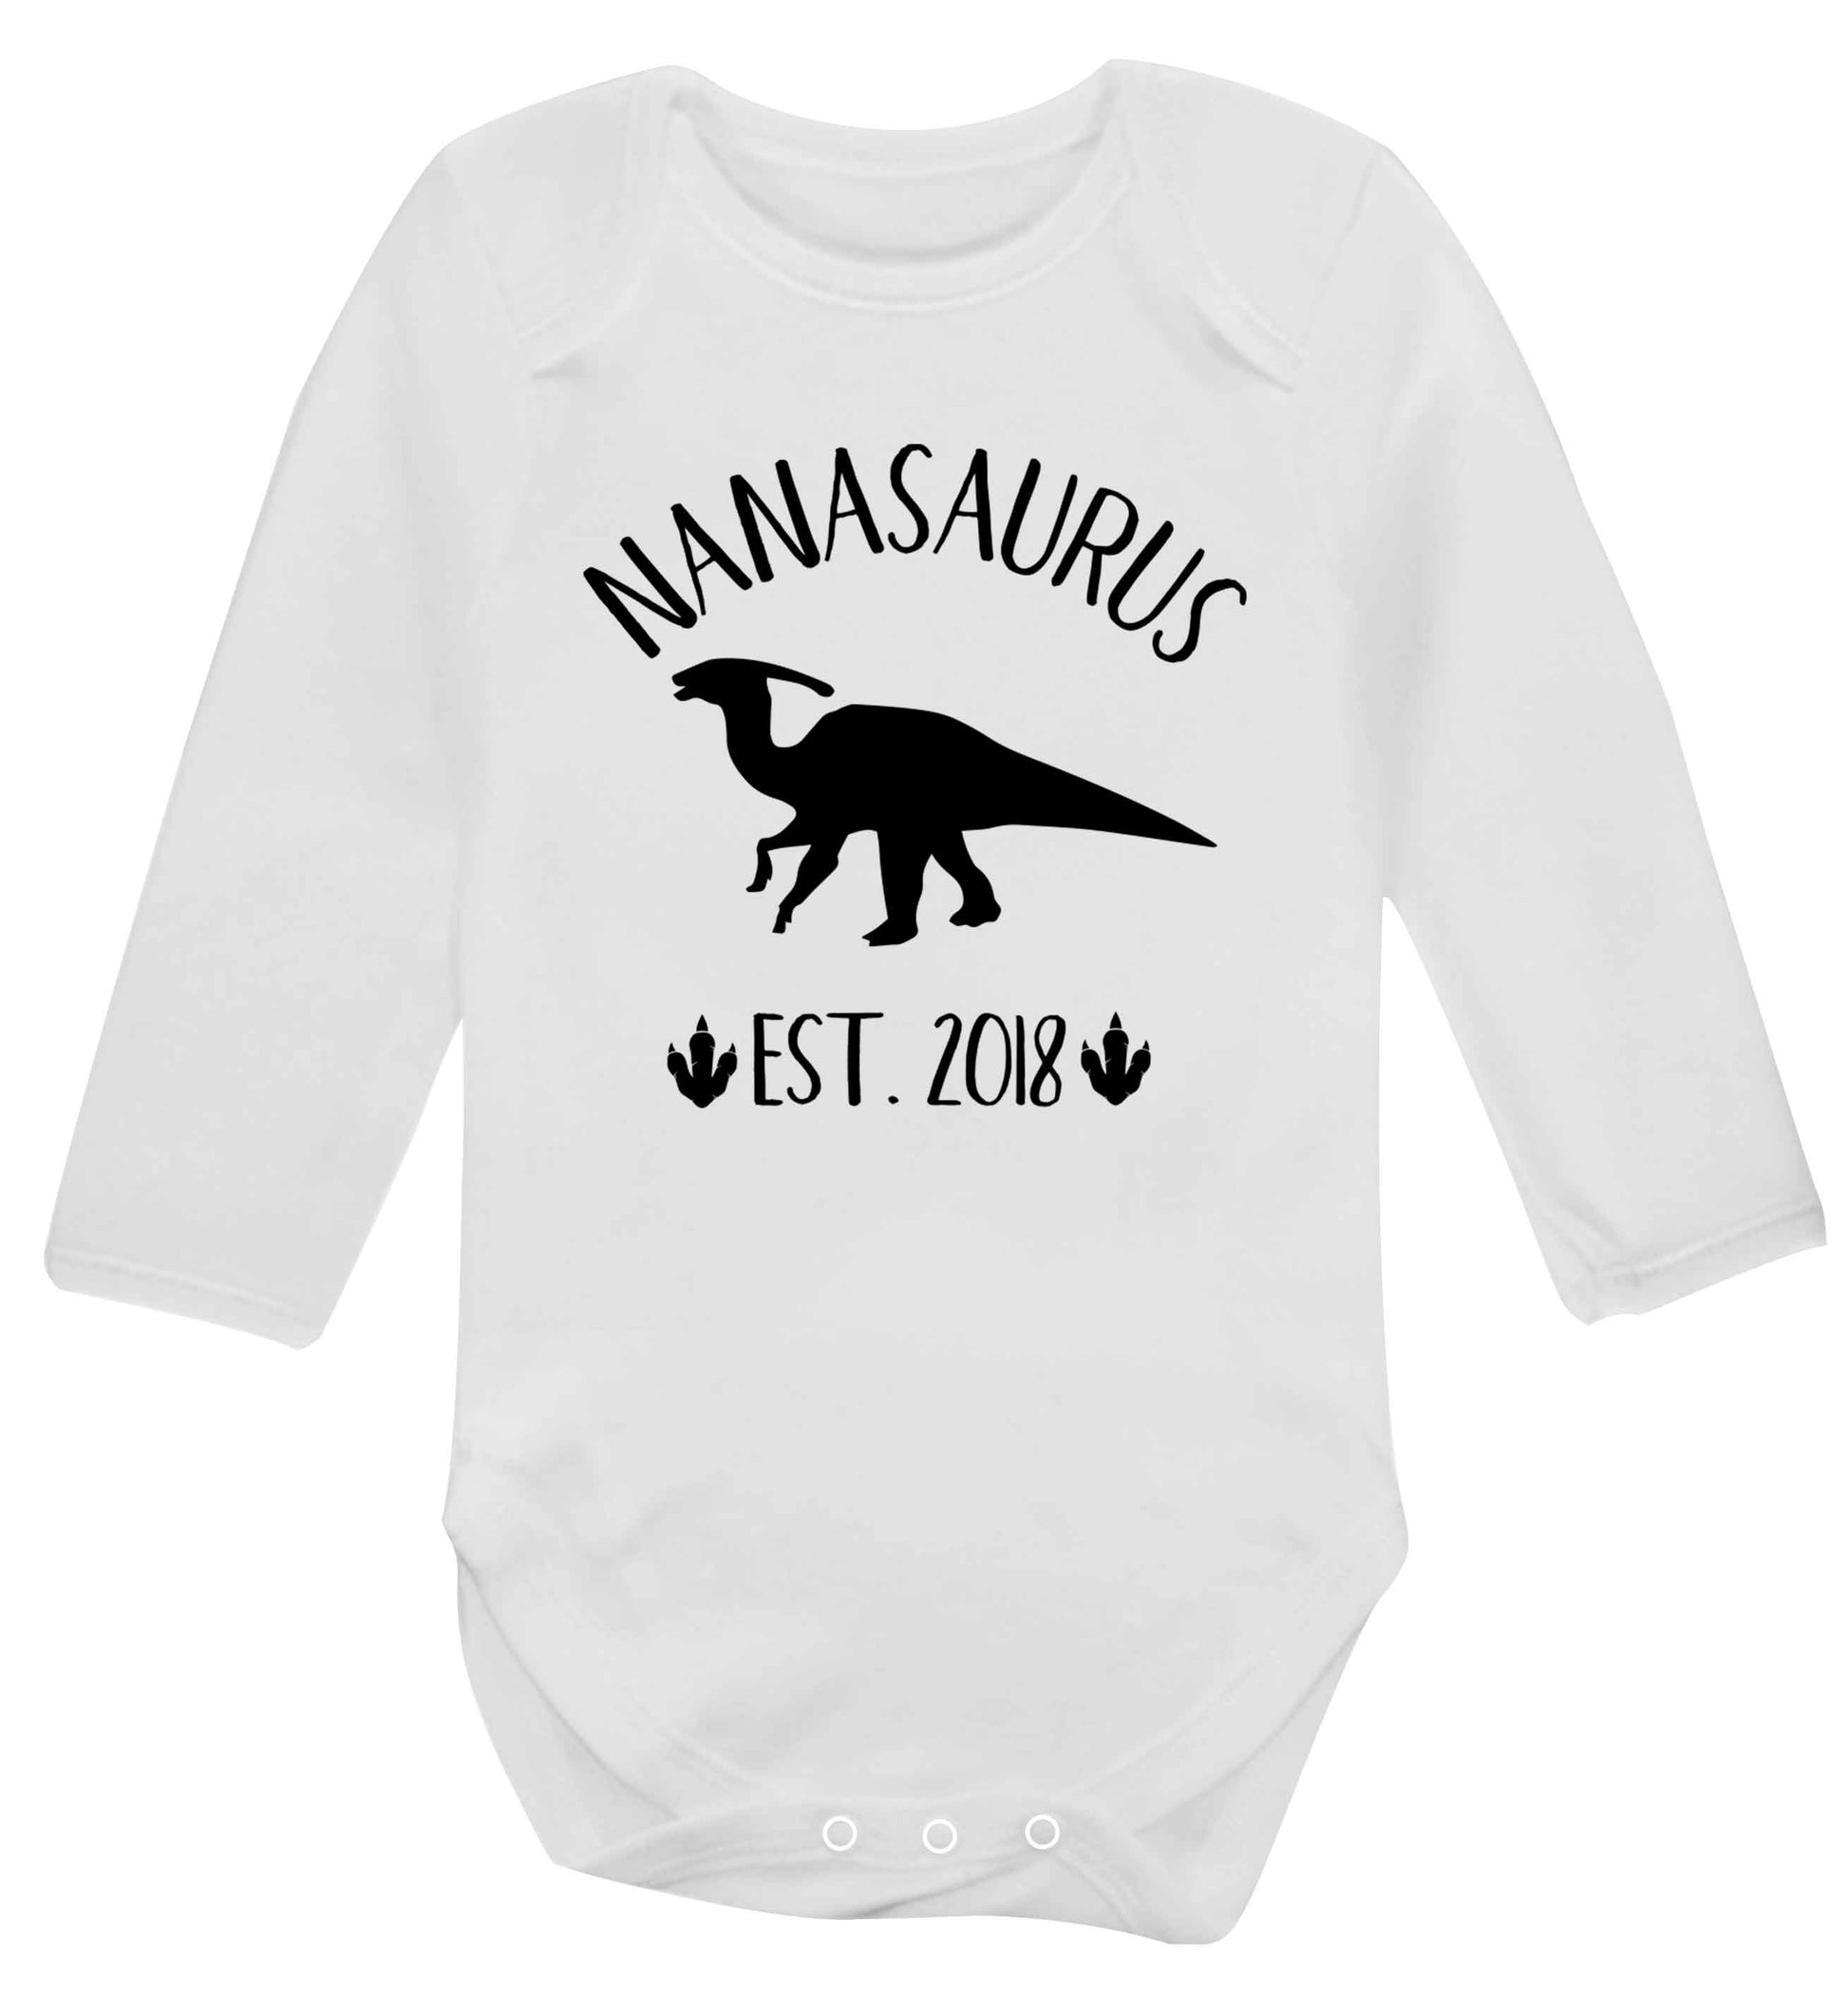 Personalised nanasaurus since (custom date) Baby Vest long sleeved white 6-12 months